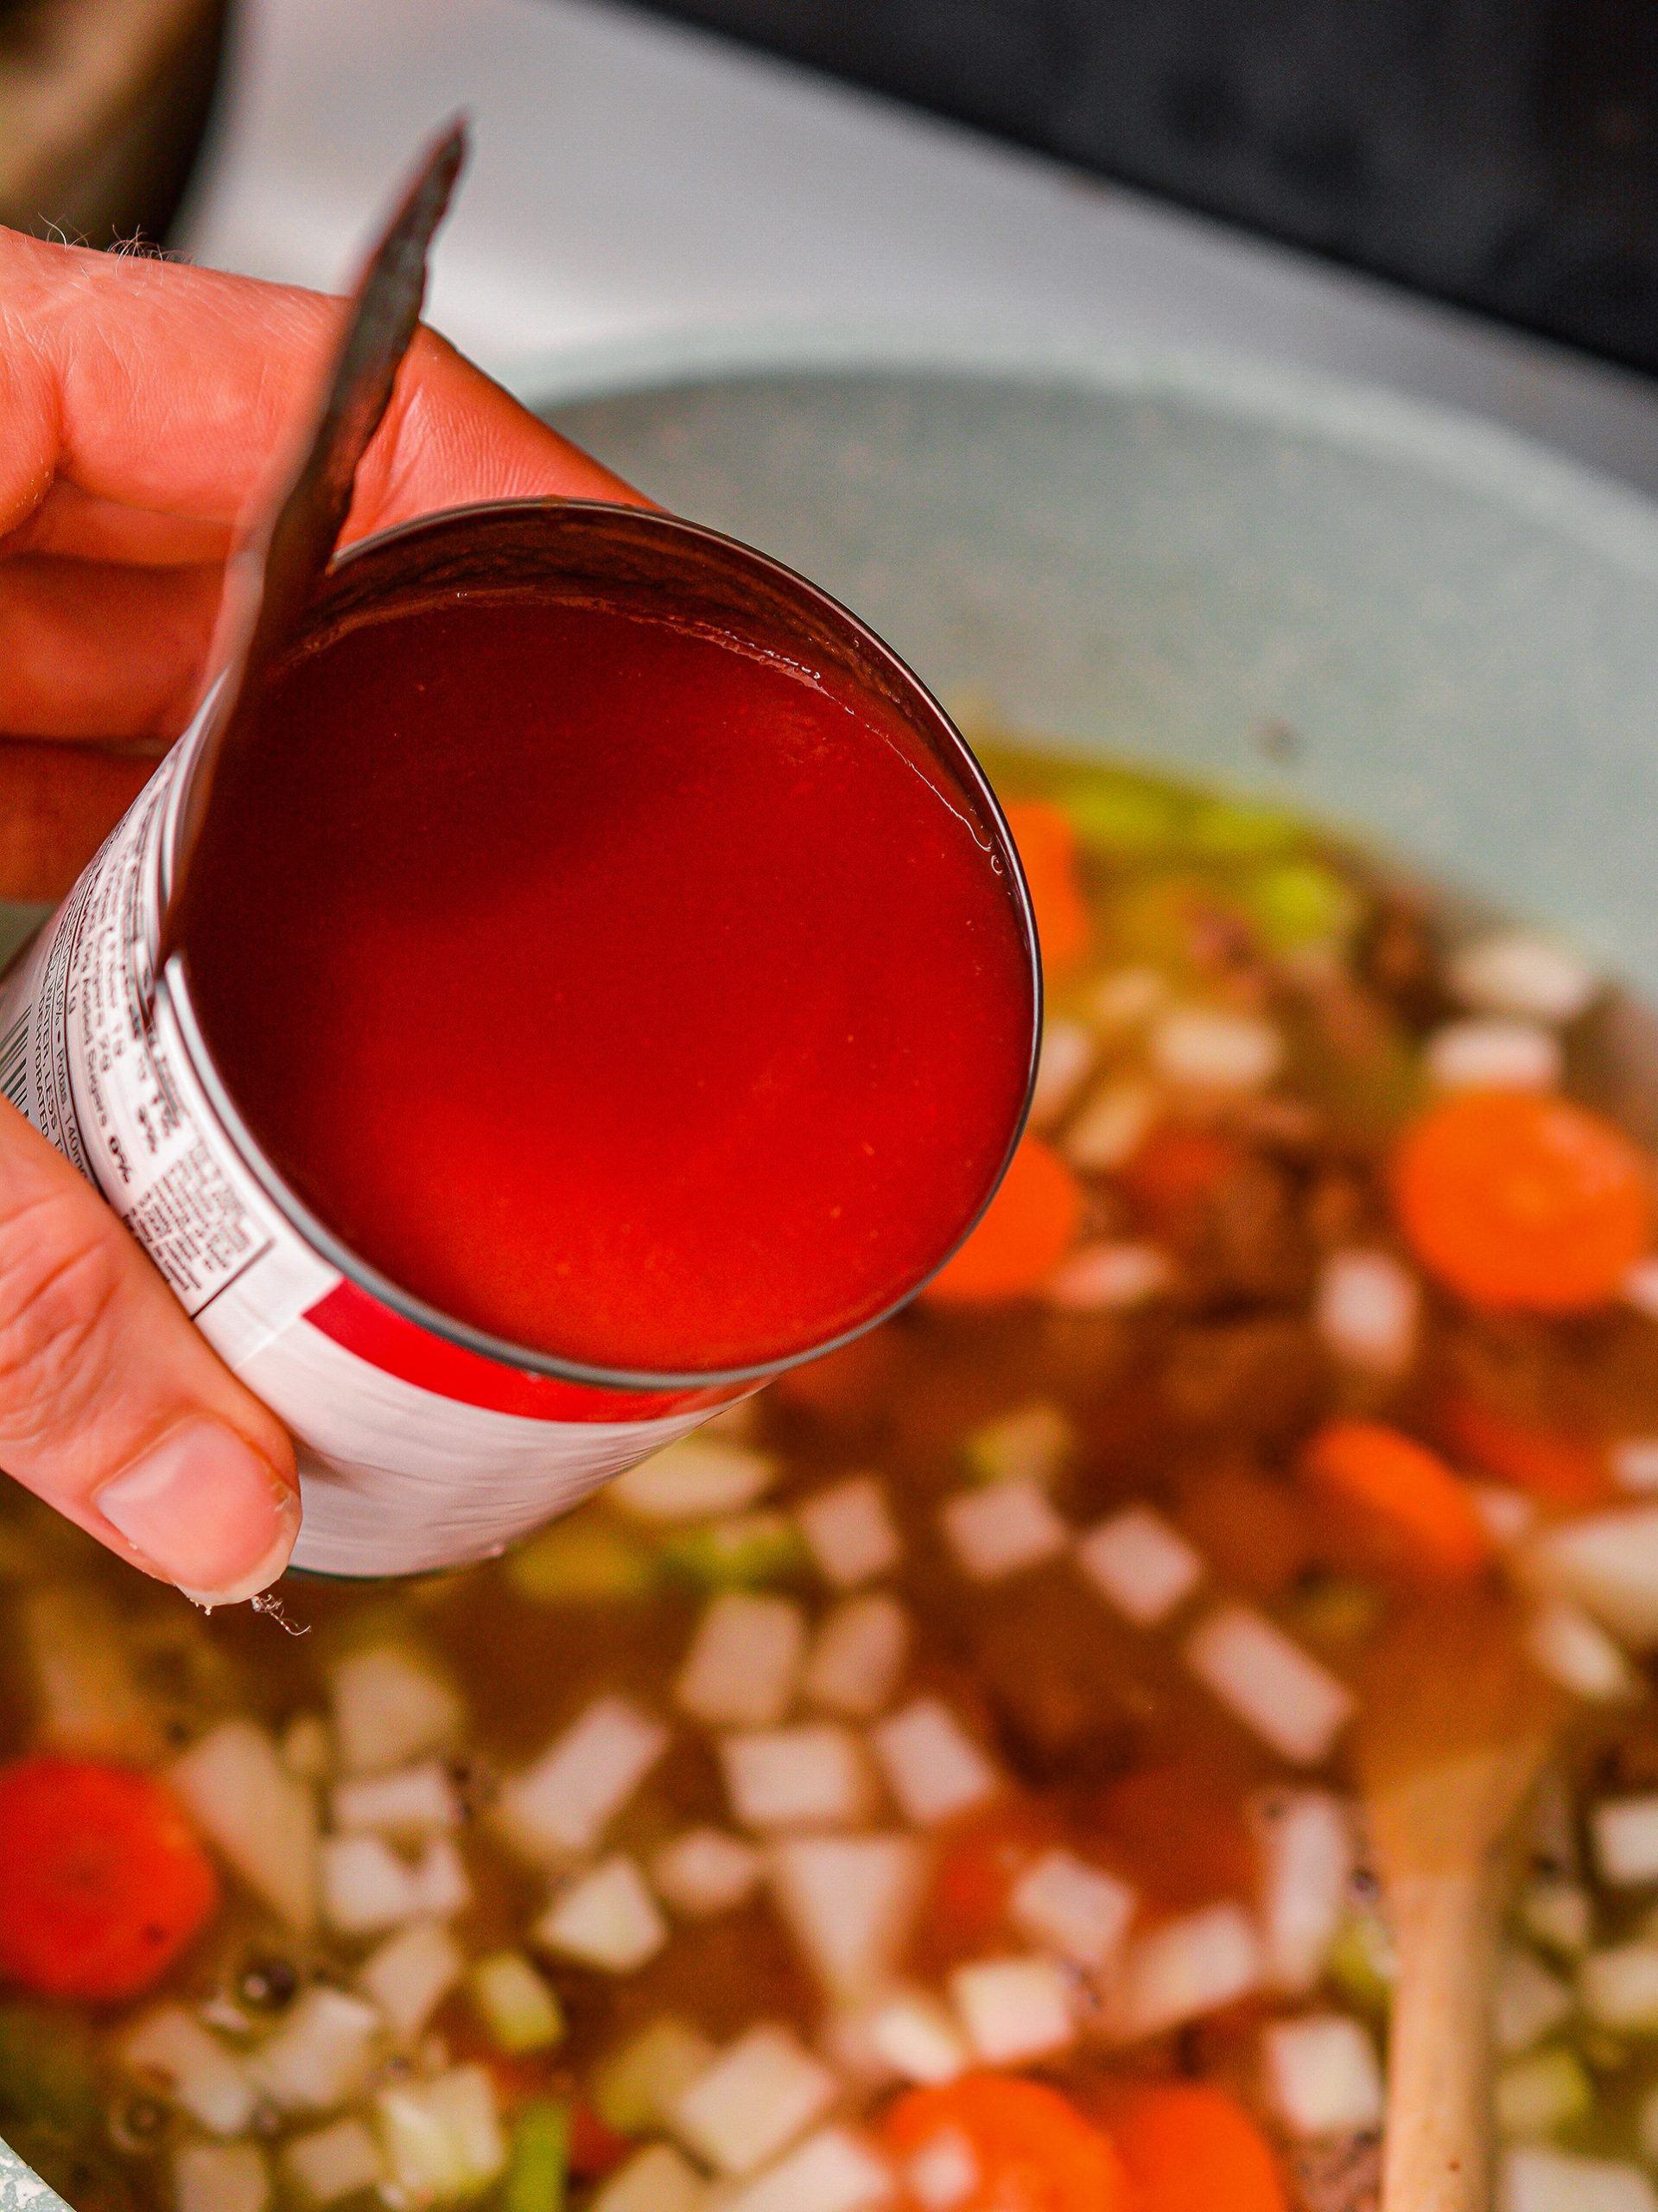 add the tomato sauce.